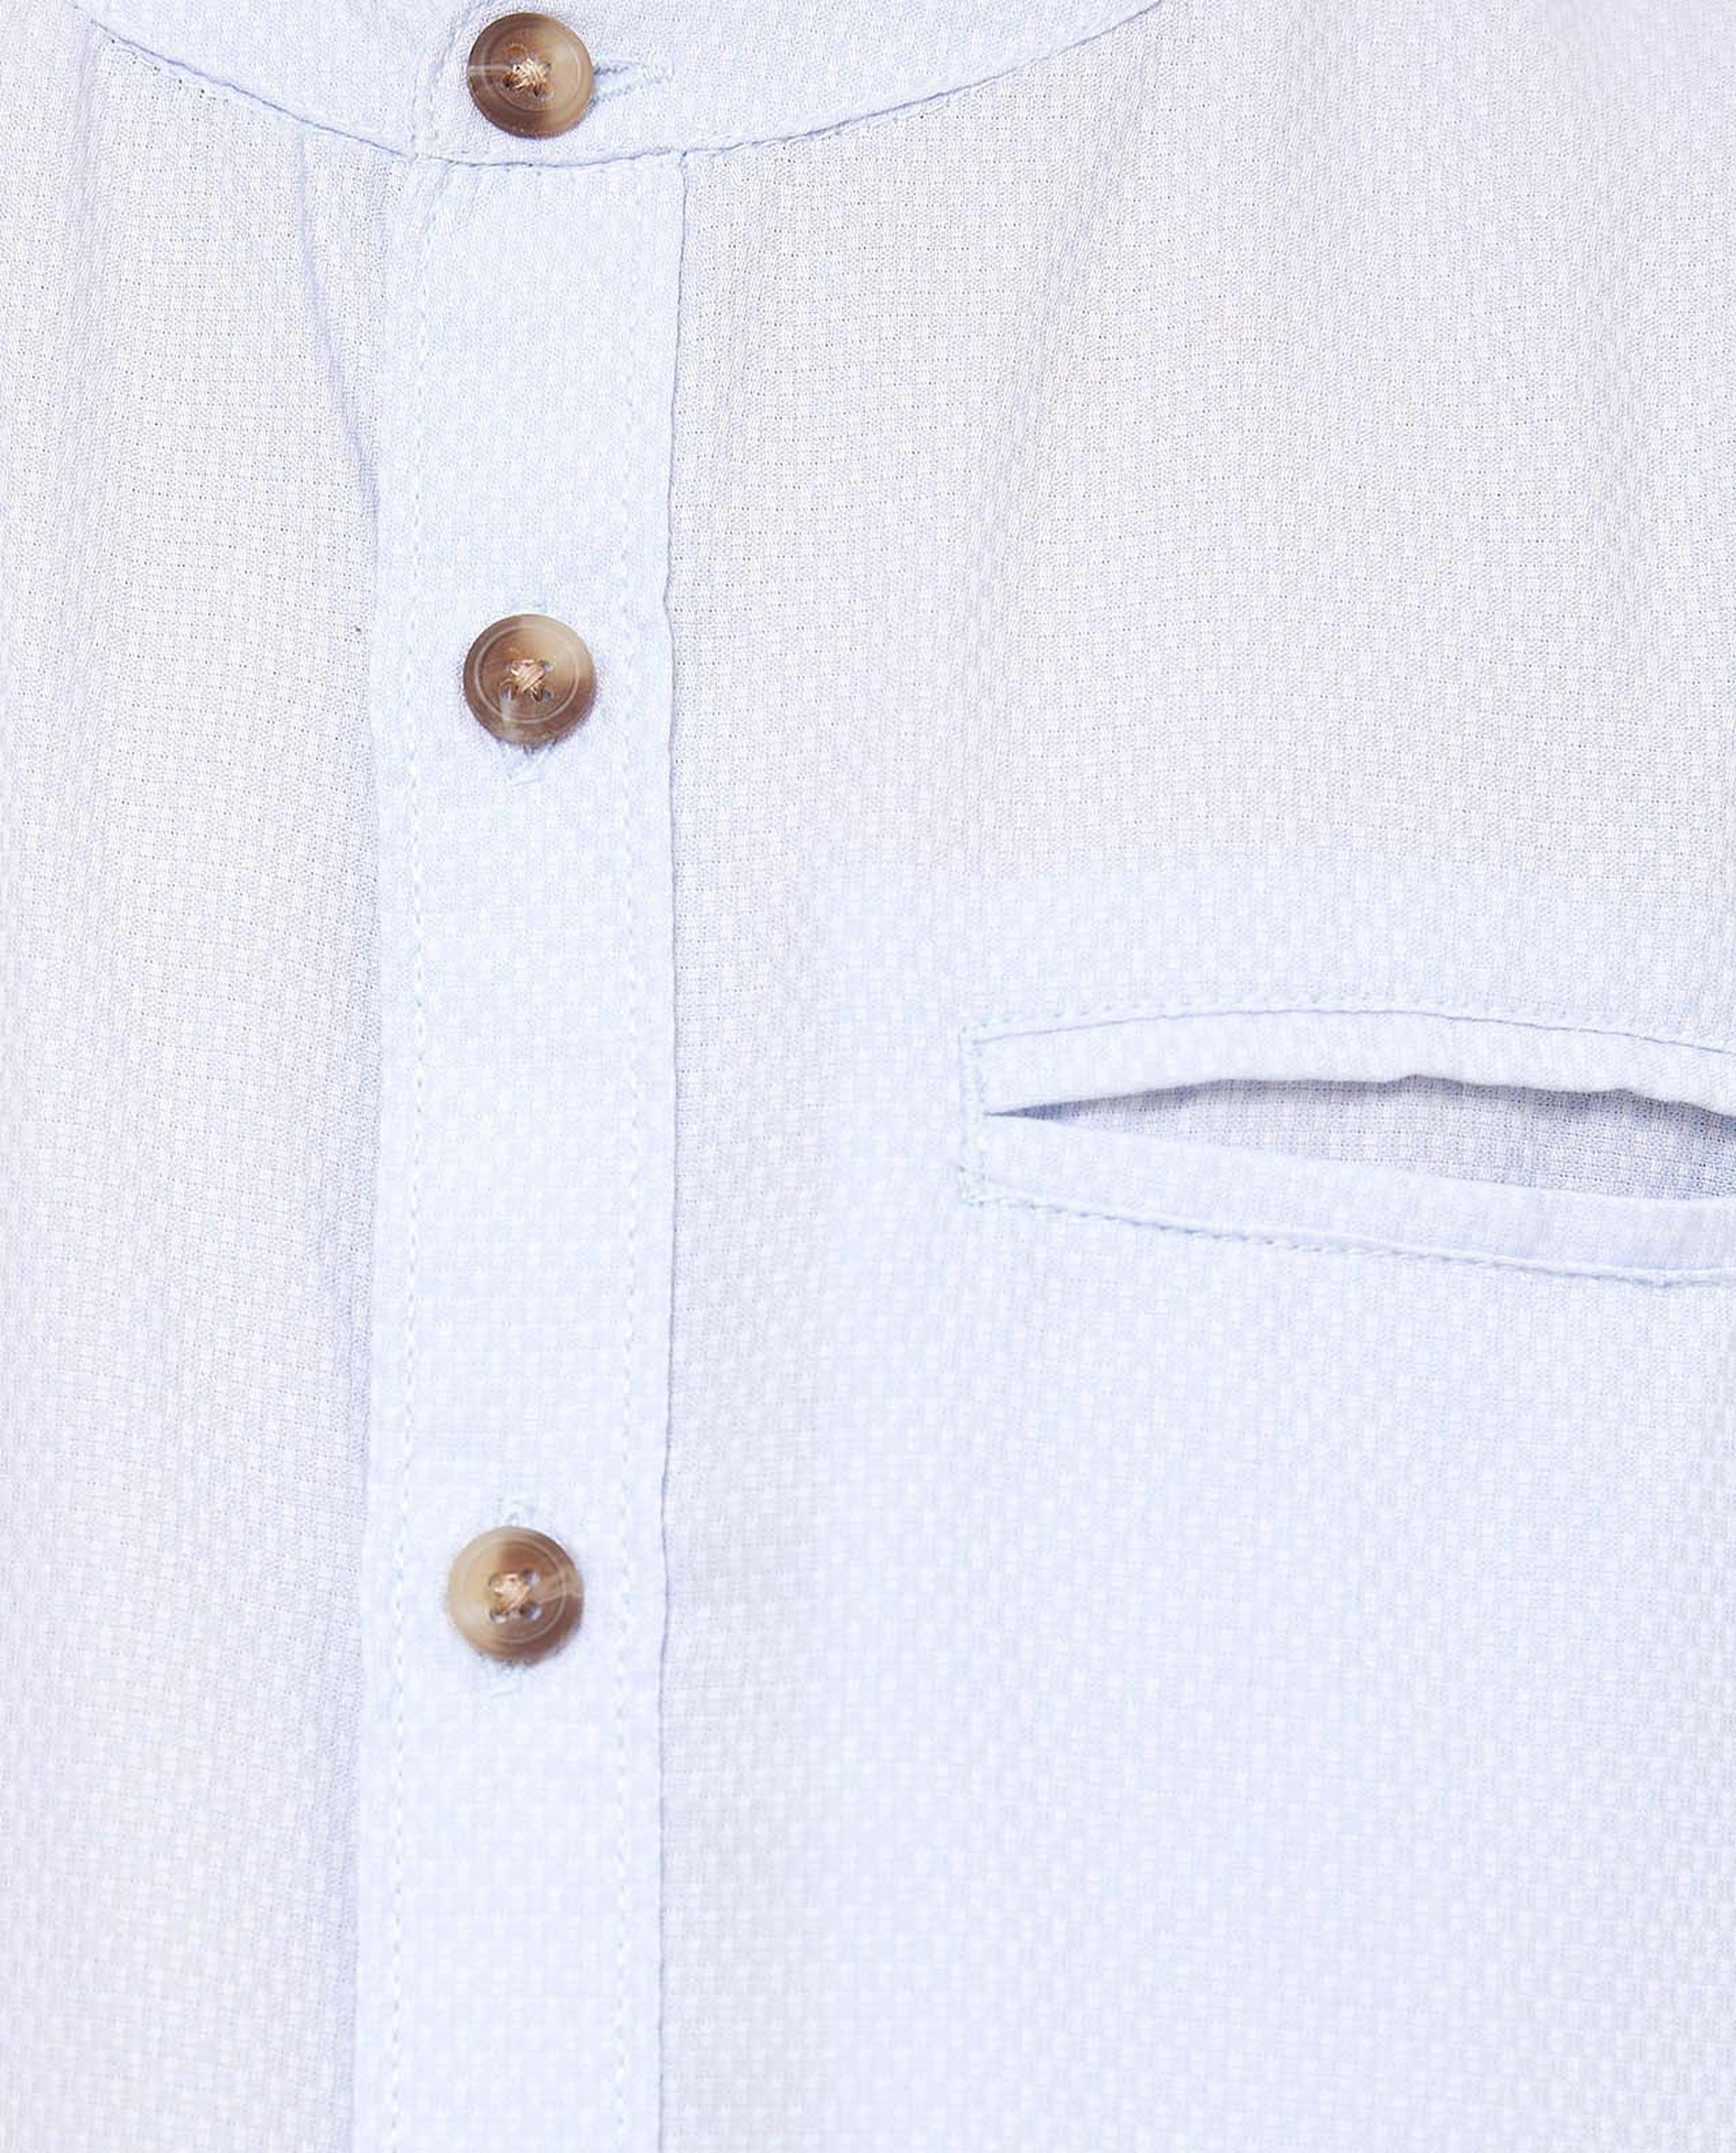 Woven Shirt with Mandarin Collar and Long Sleeves